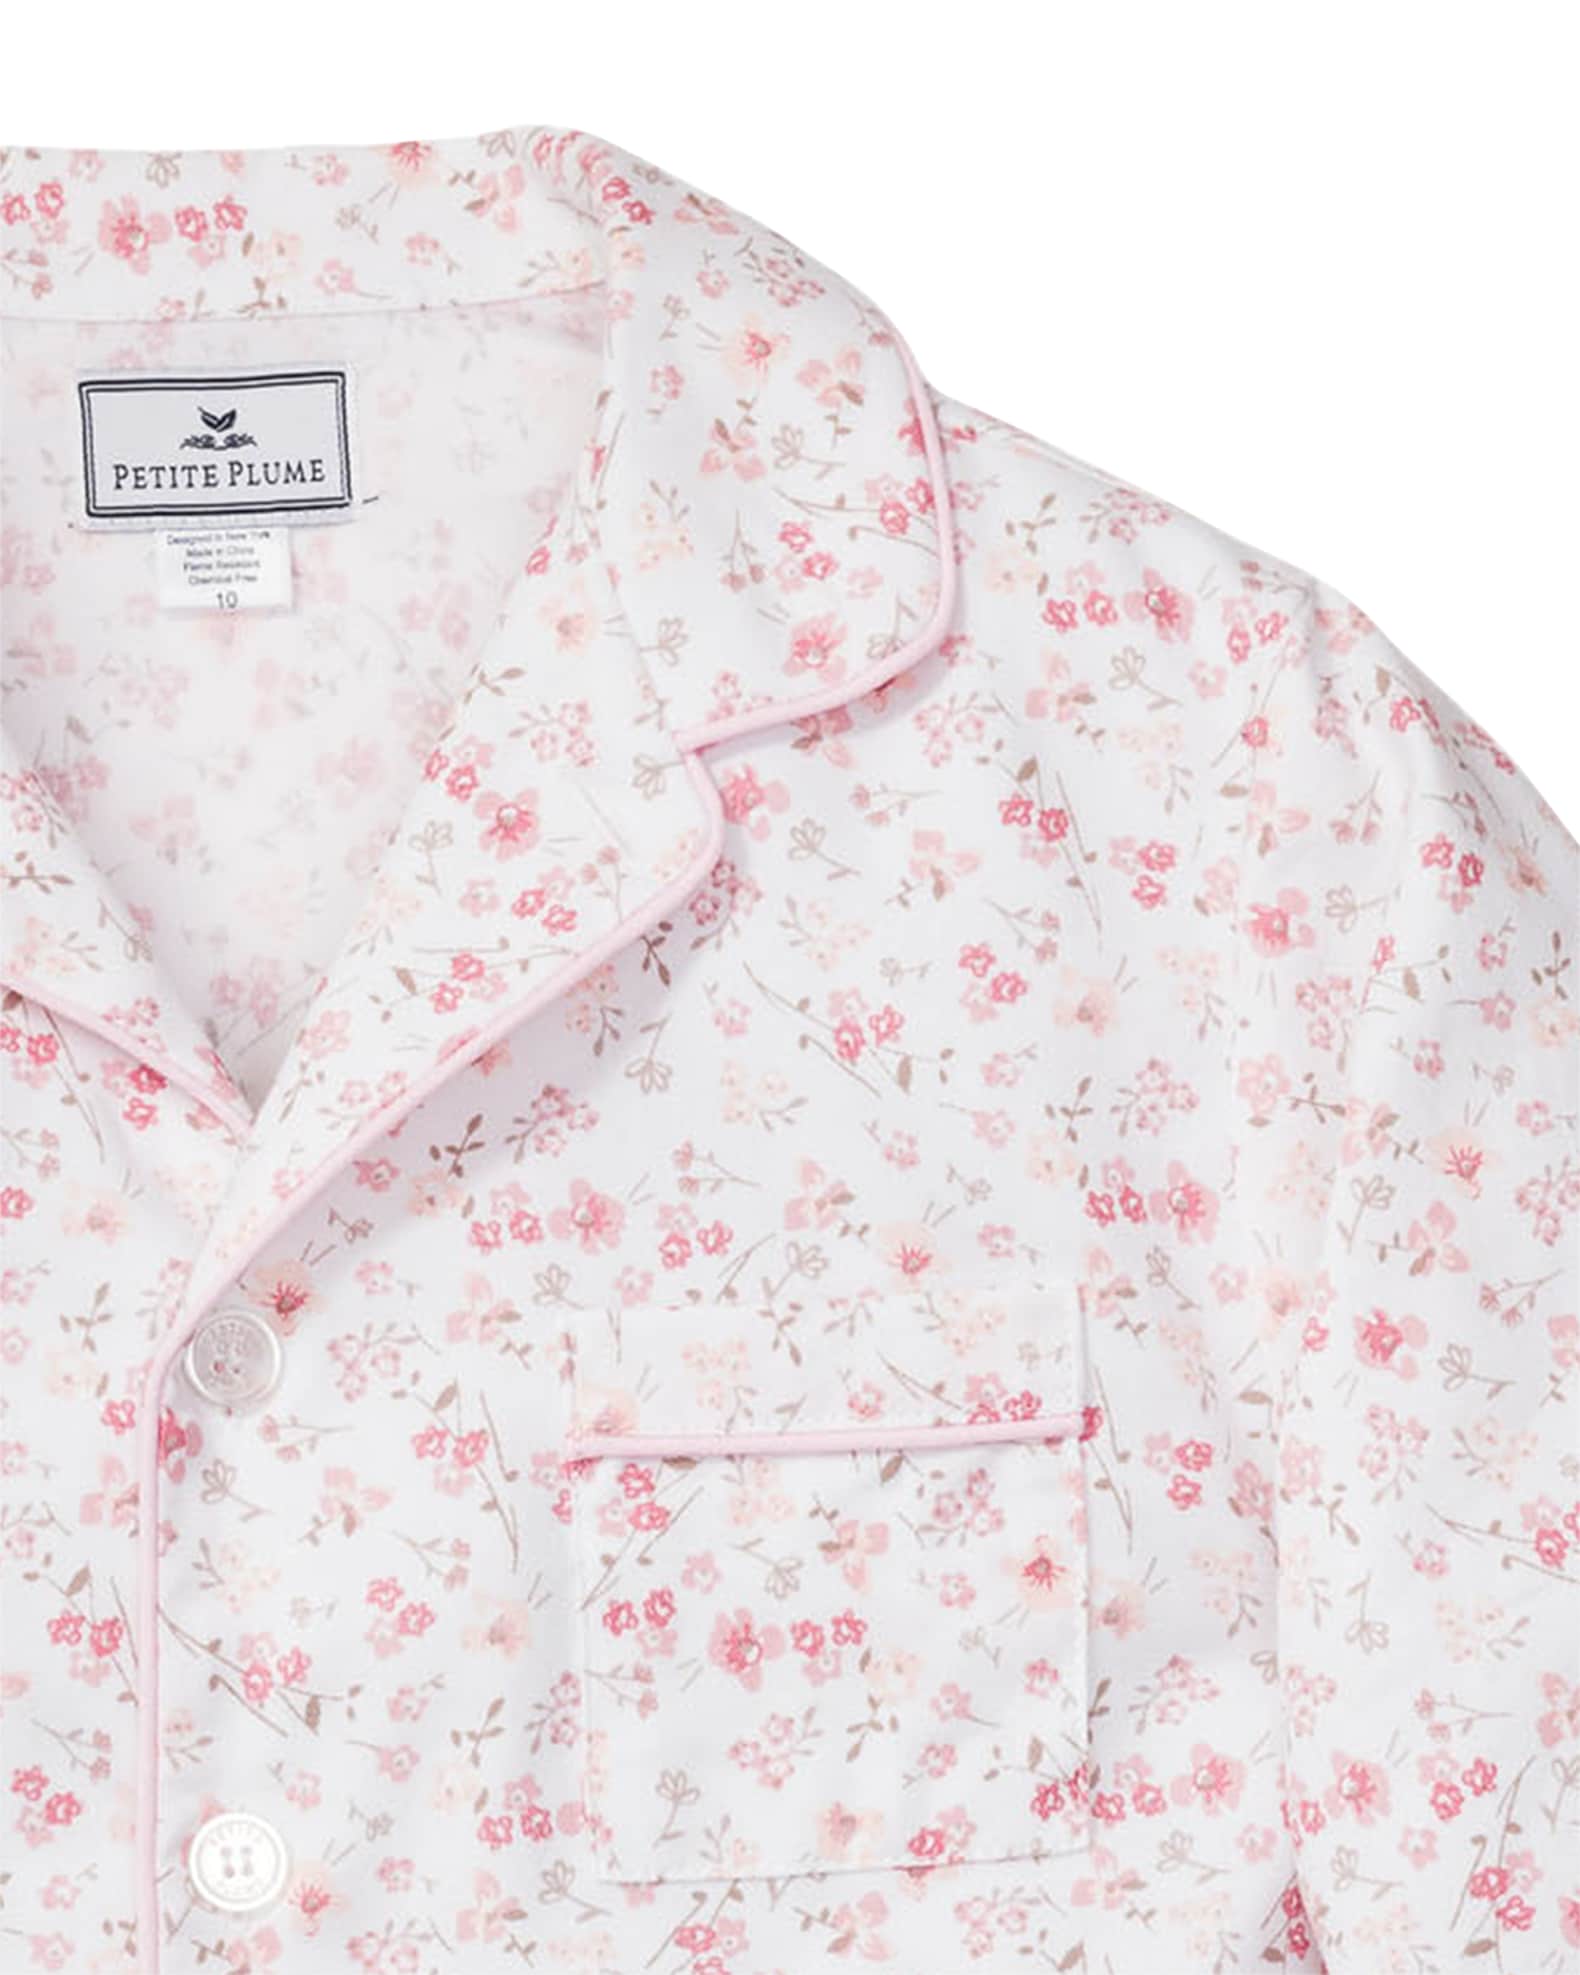 Petite Plume Girl's Dorset Floral-Print 2-Piece Pajama Set, Size 6M-14 |  Neiman Marcus